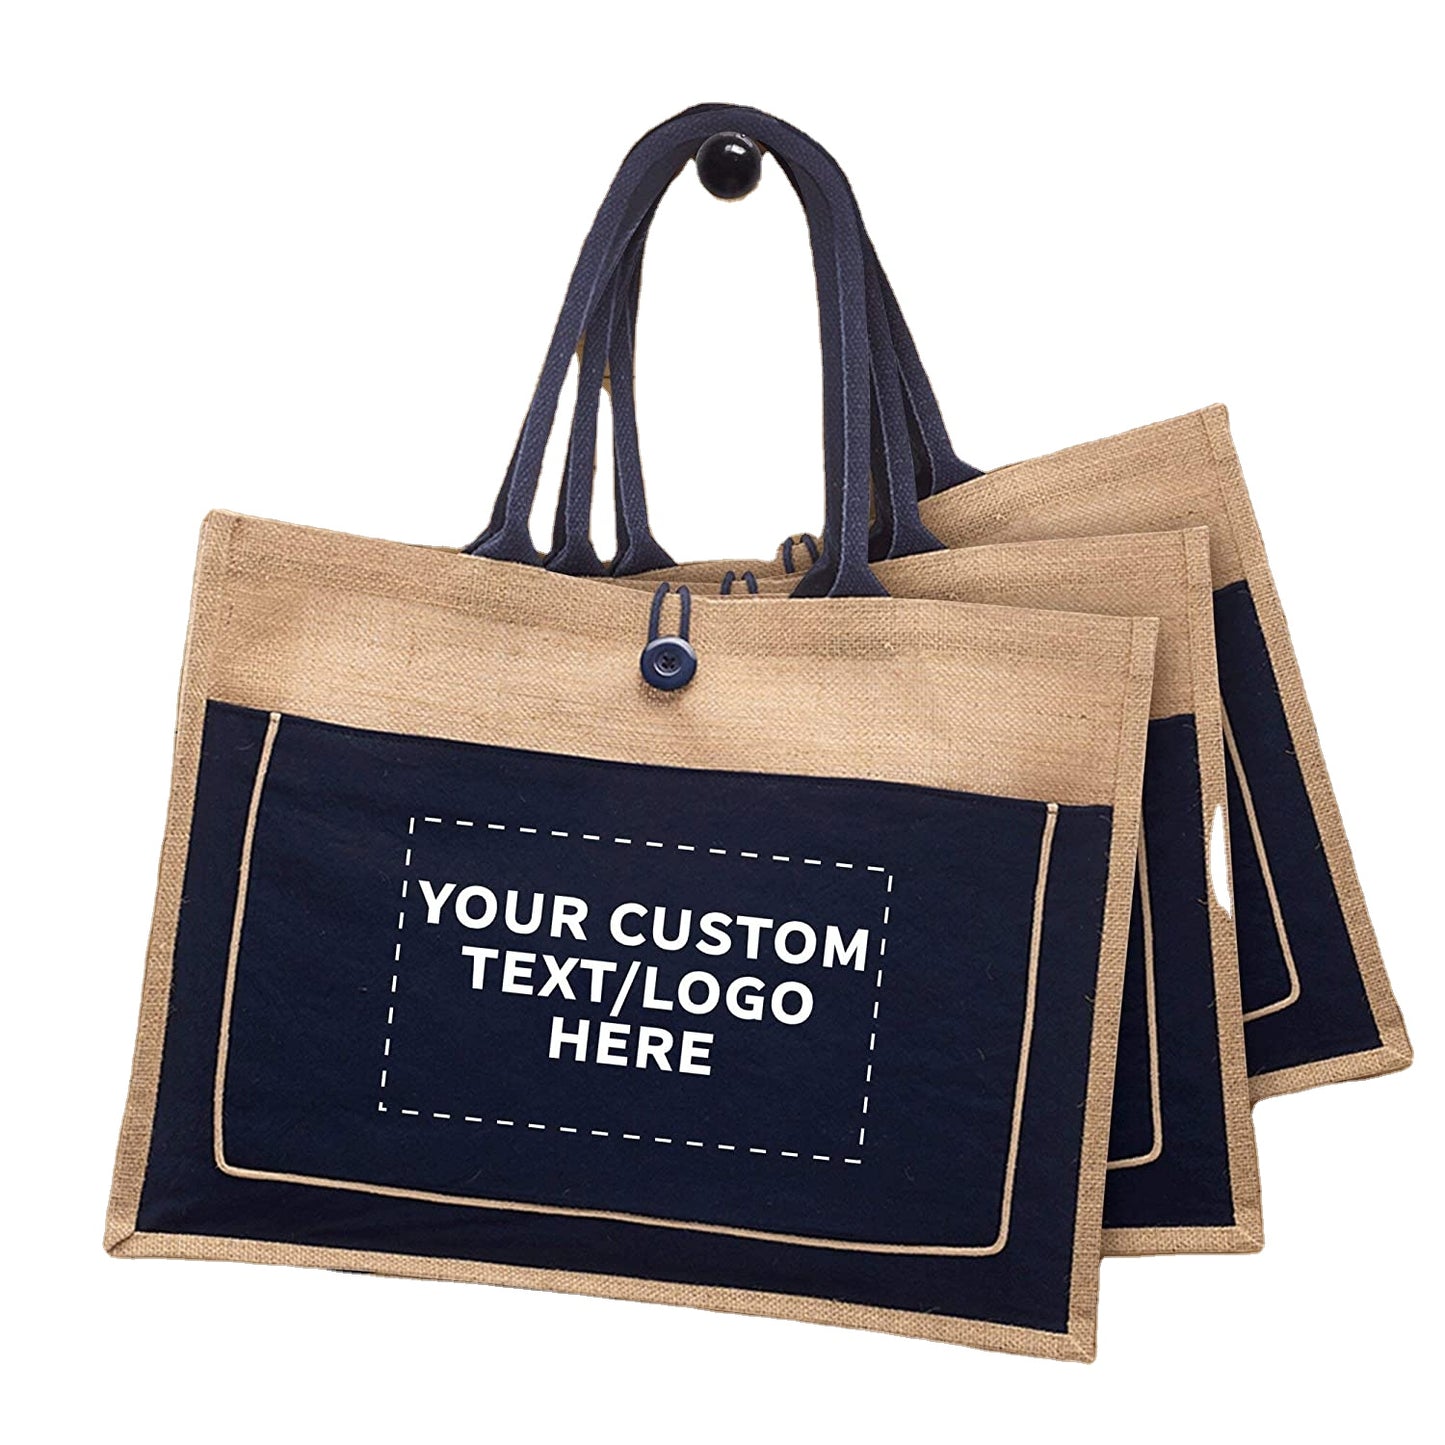 Custom Bag made from Scratch